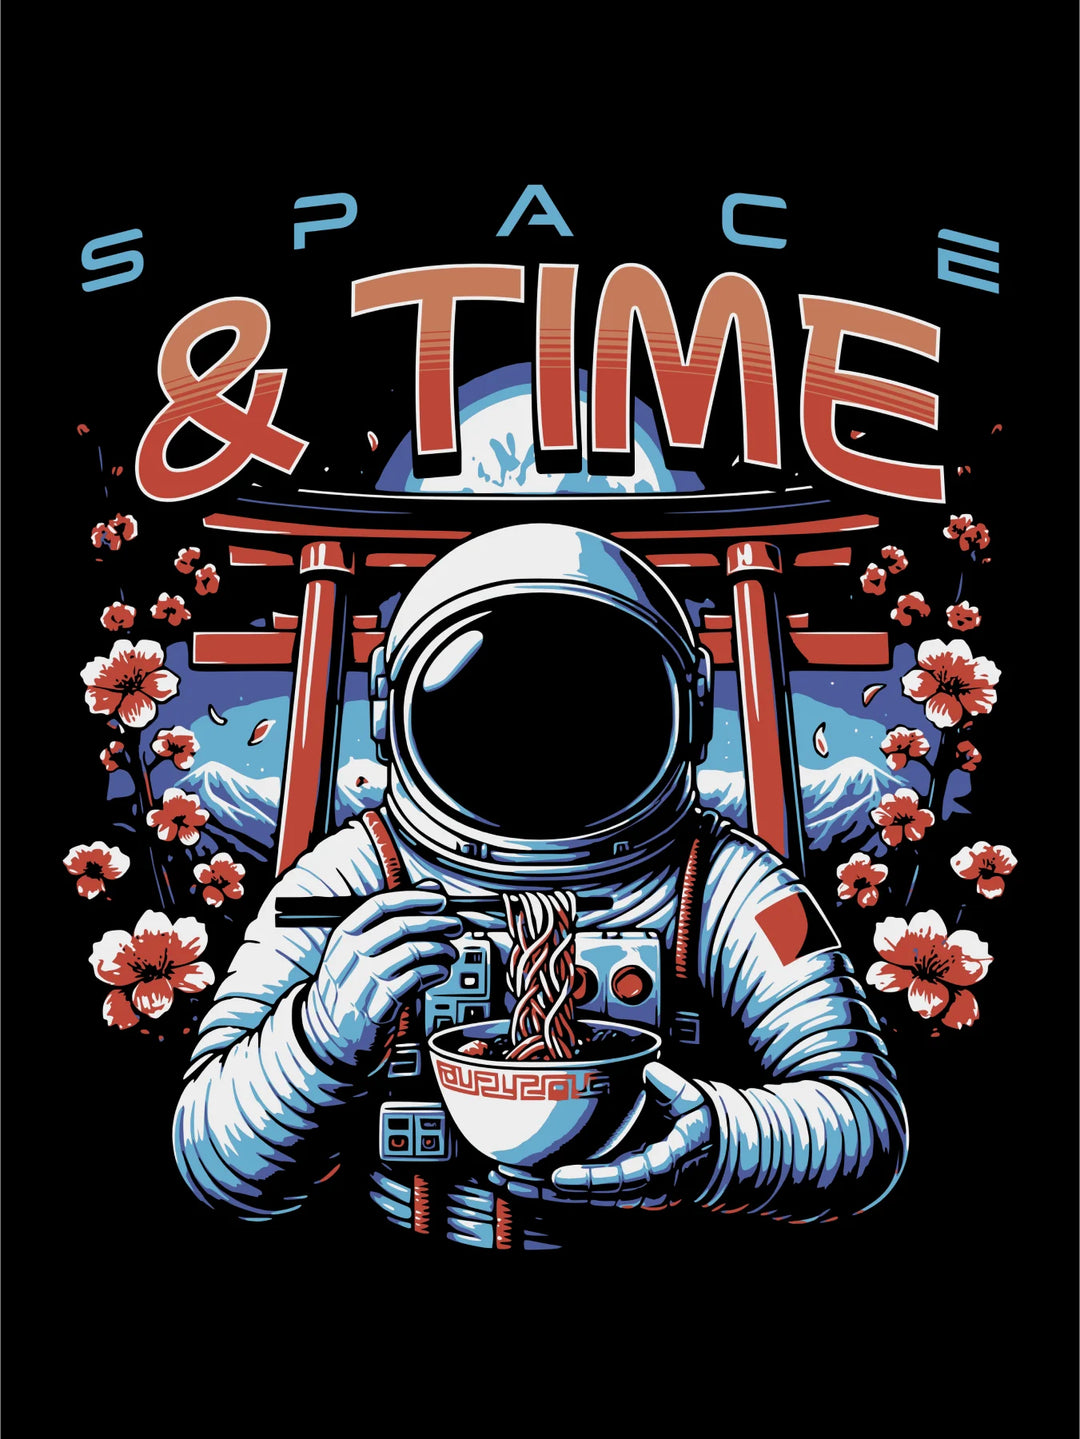 Astronaut - Unisex T-Shirt